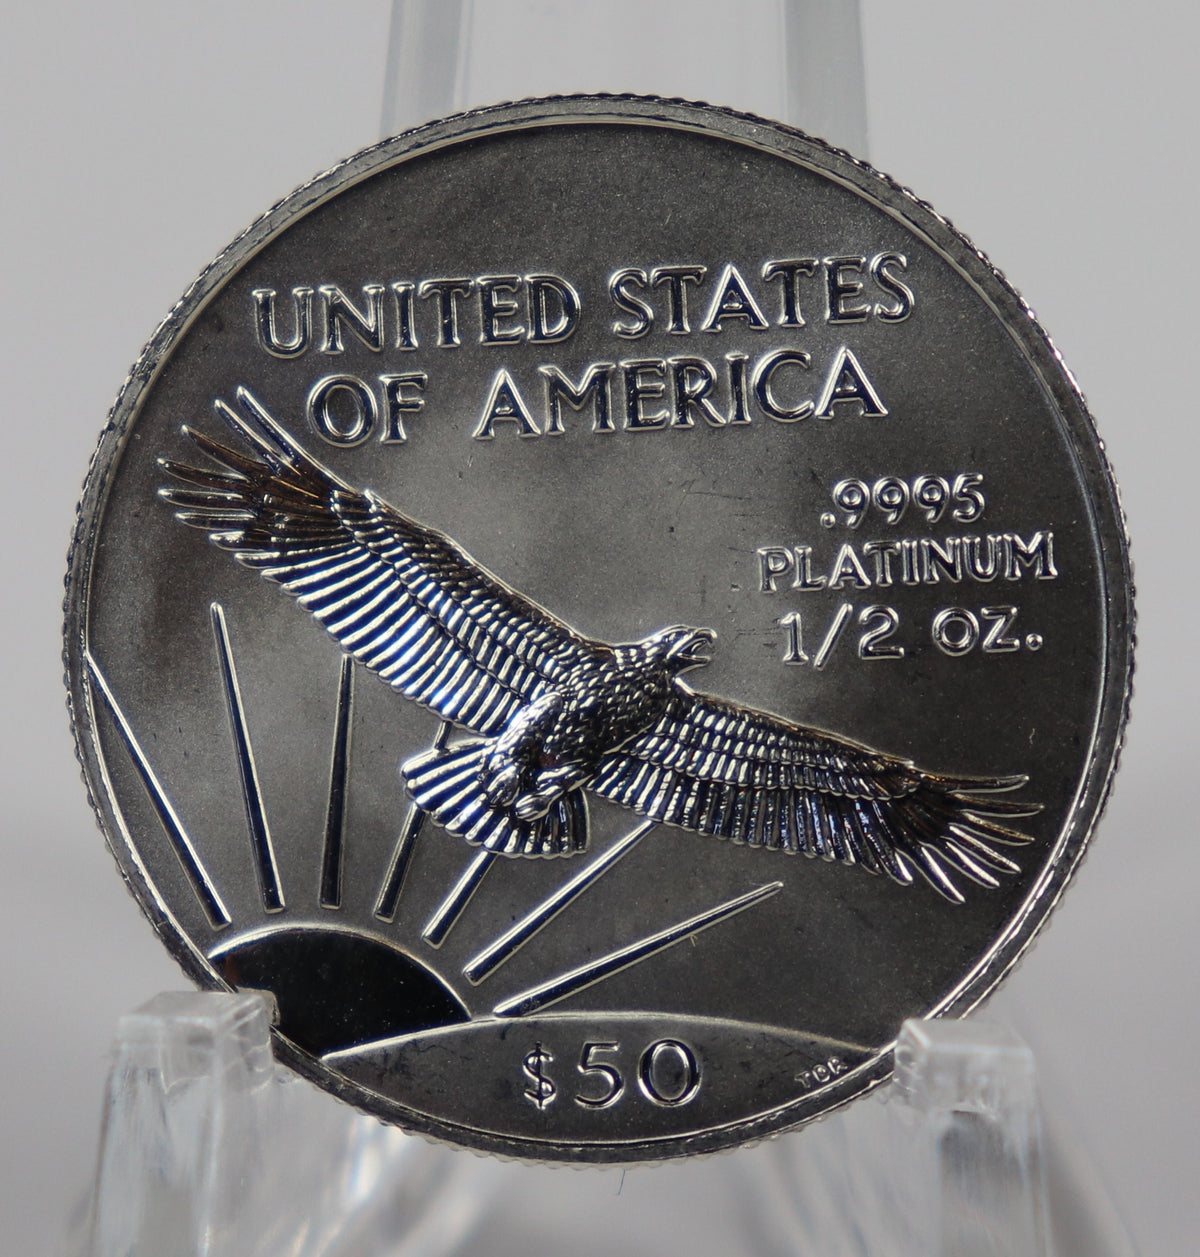 U.S. Mint Platinum Coin